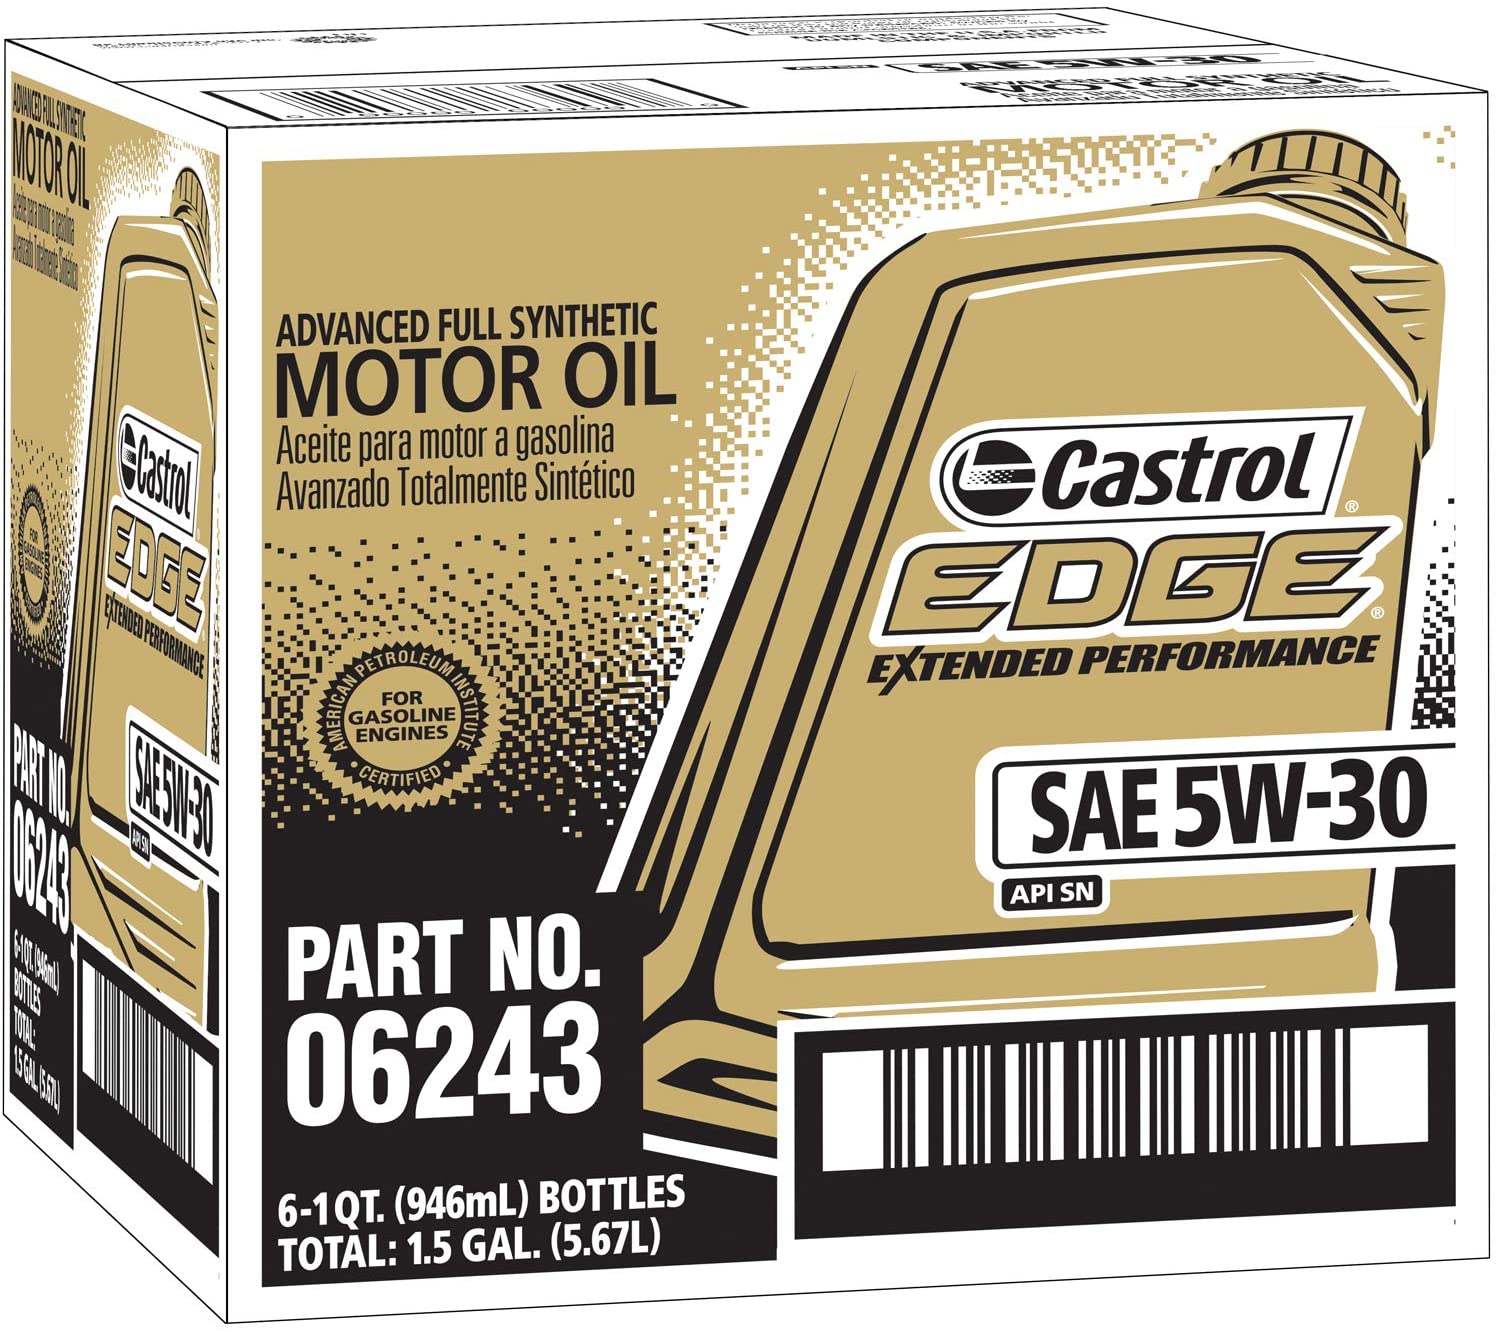 Castrol EDGE Extended Performance 5W-30 Full Synthetic Motor Oil, 5 Quarts